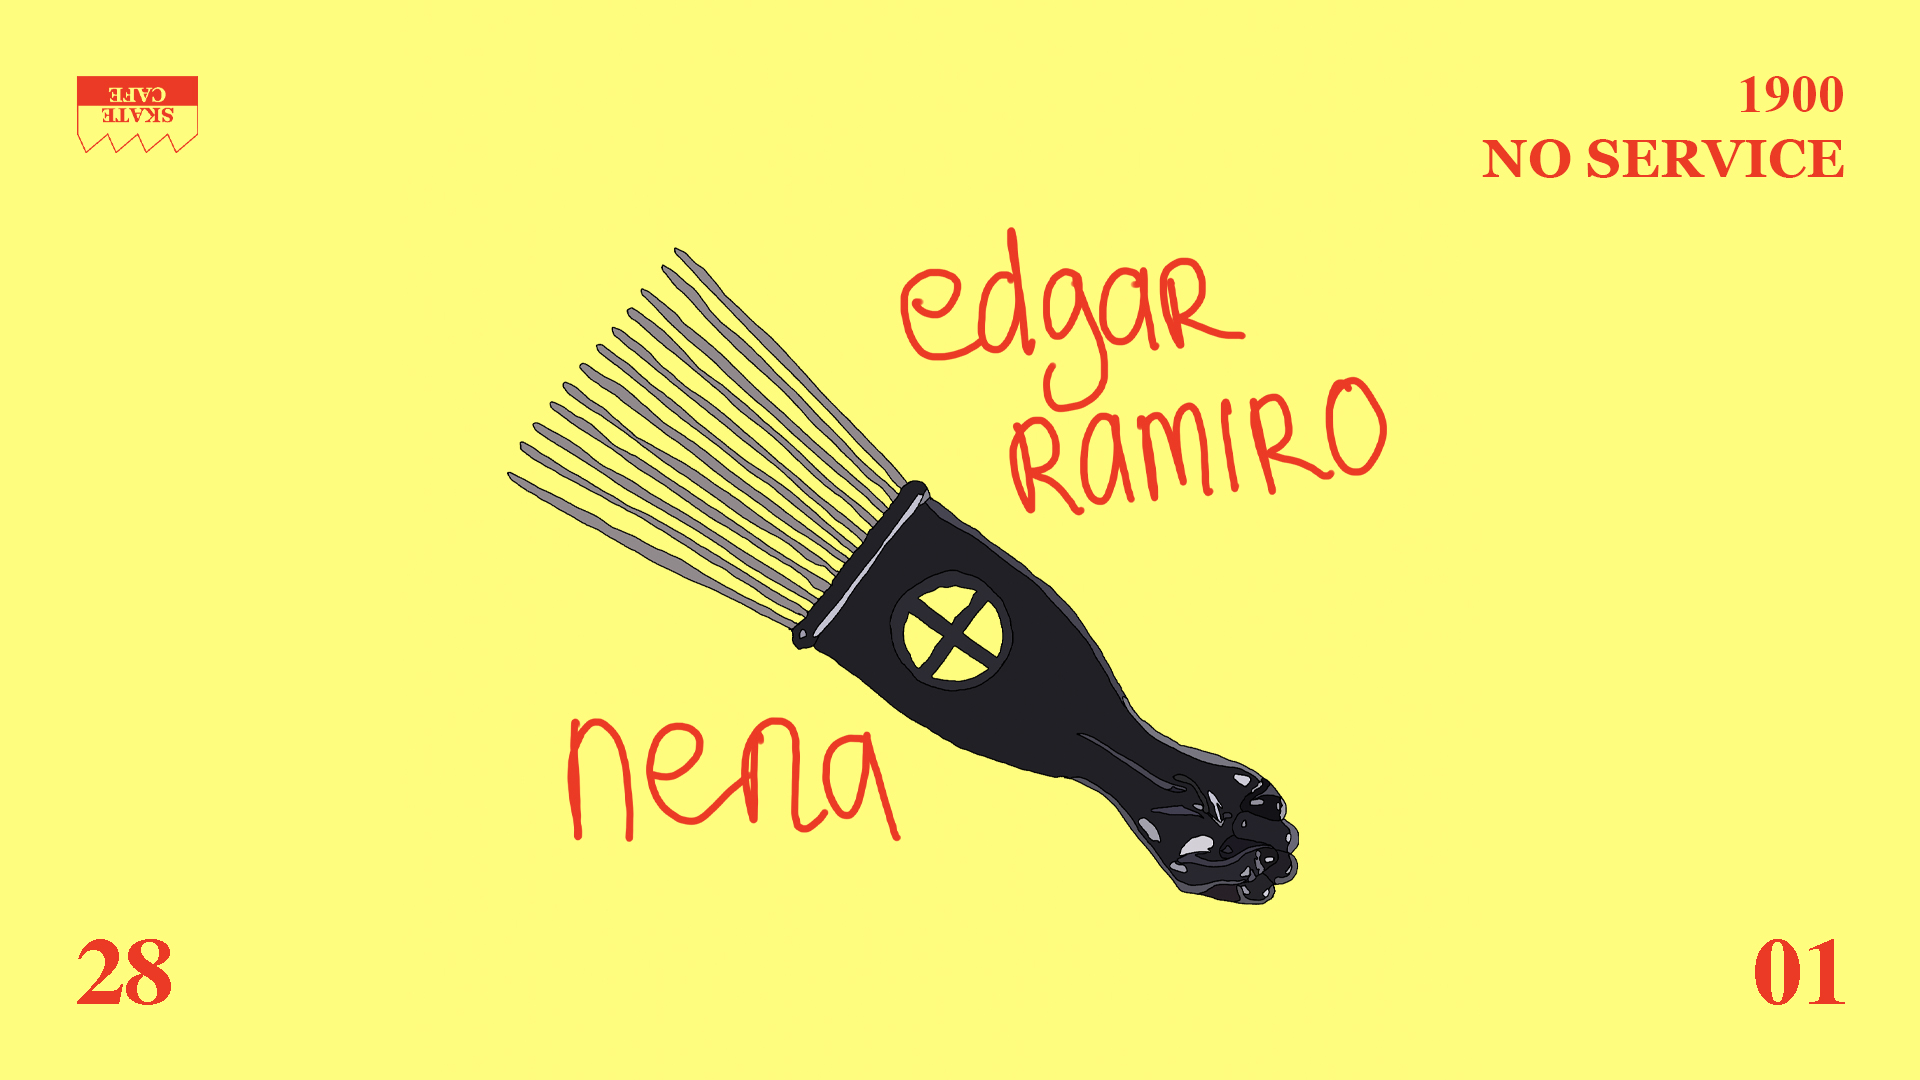 EDGAR RAMIRO, NÈNA, NO SERVICE header